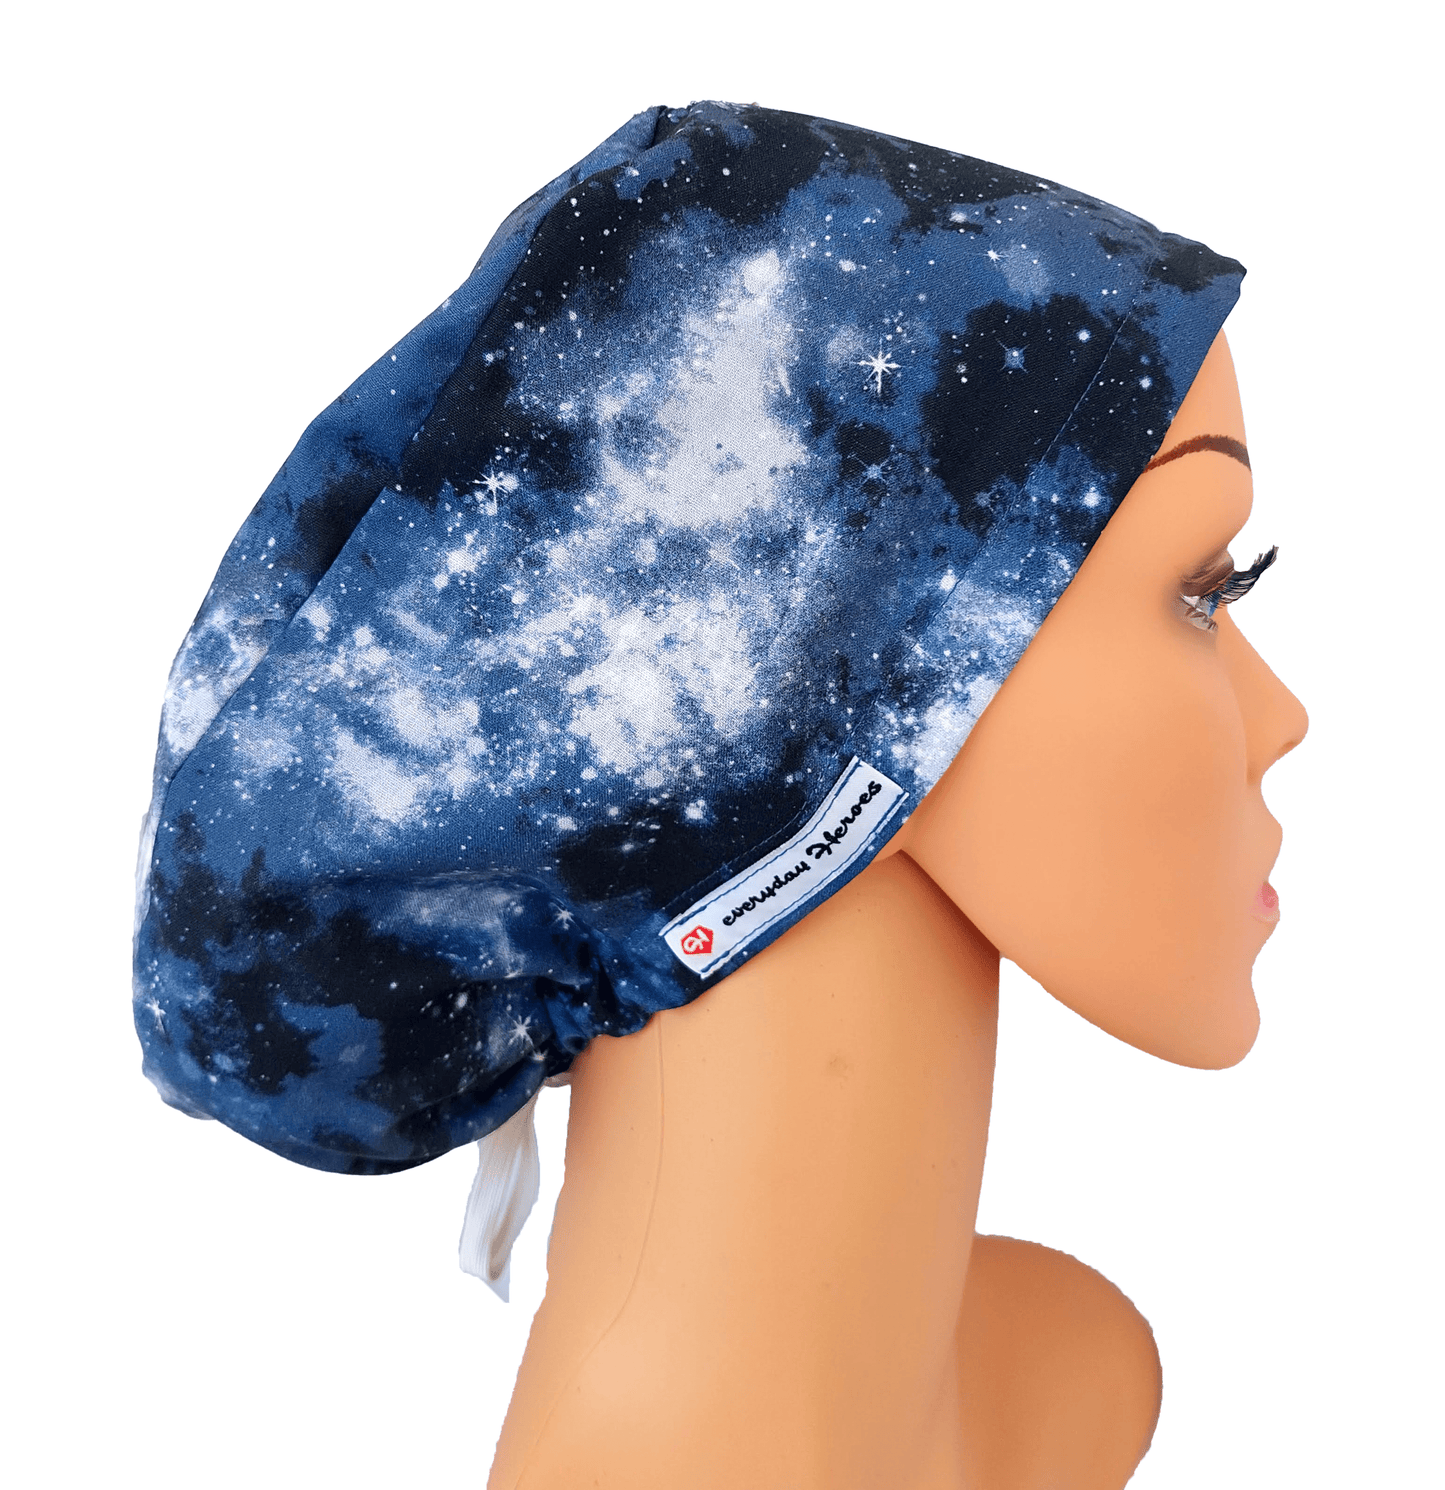 Stellar Constellation Scrub Cap For Women